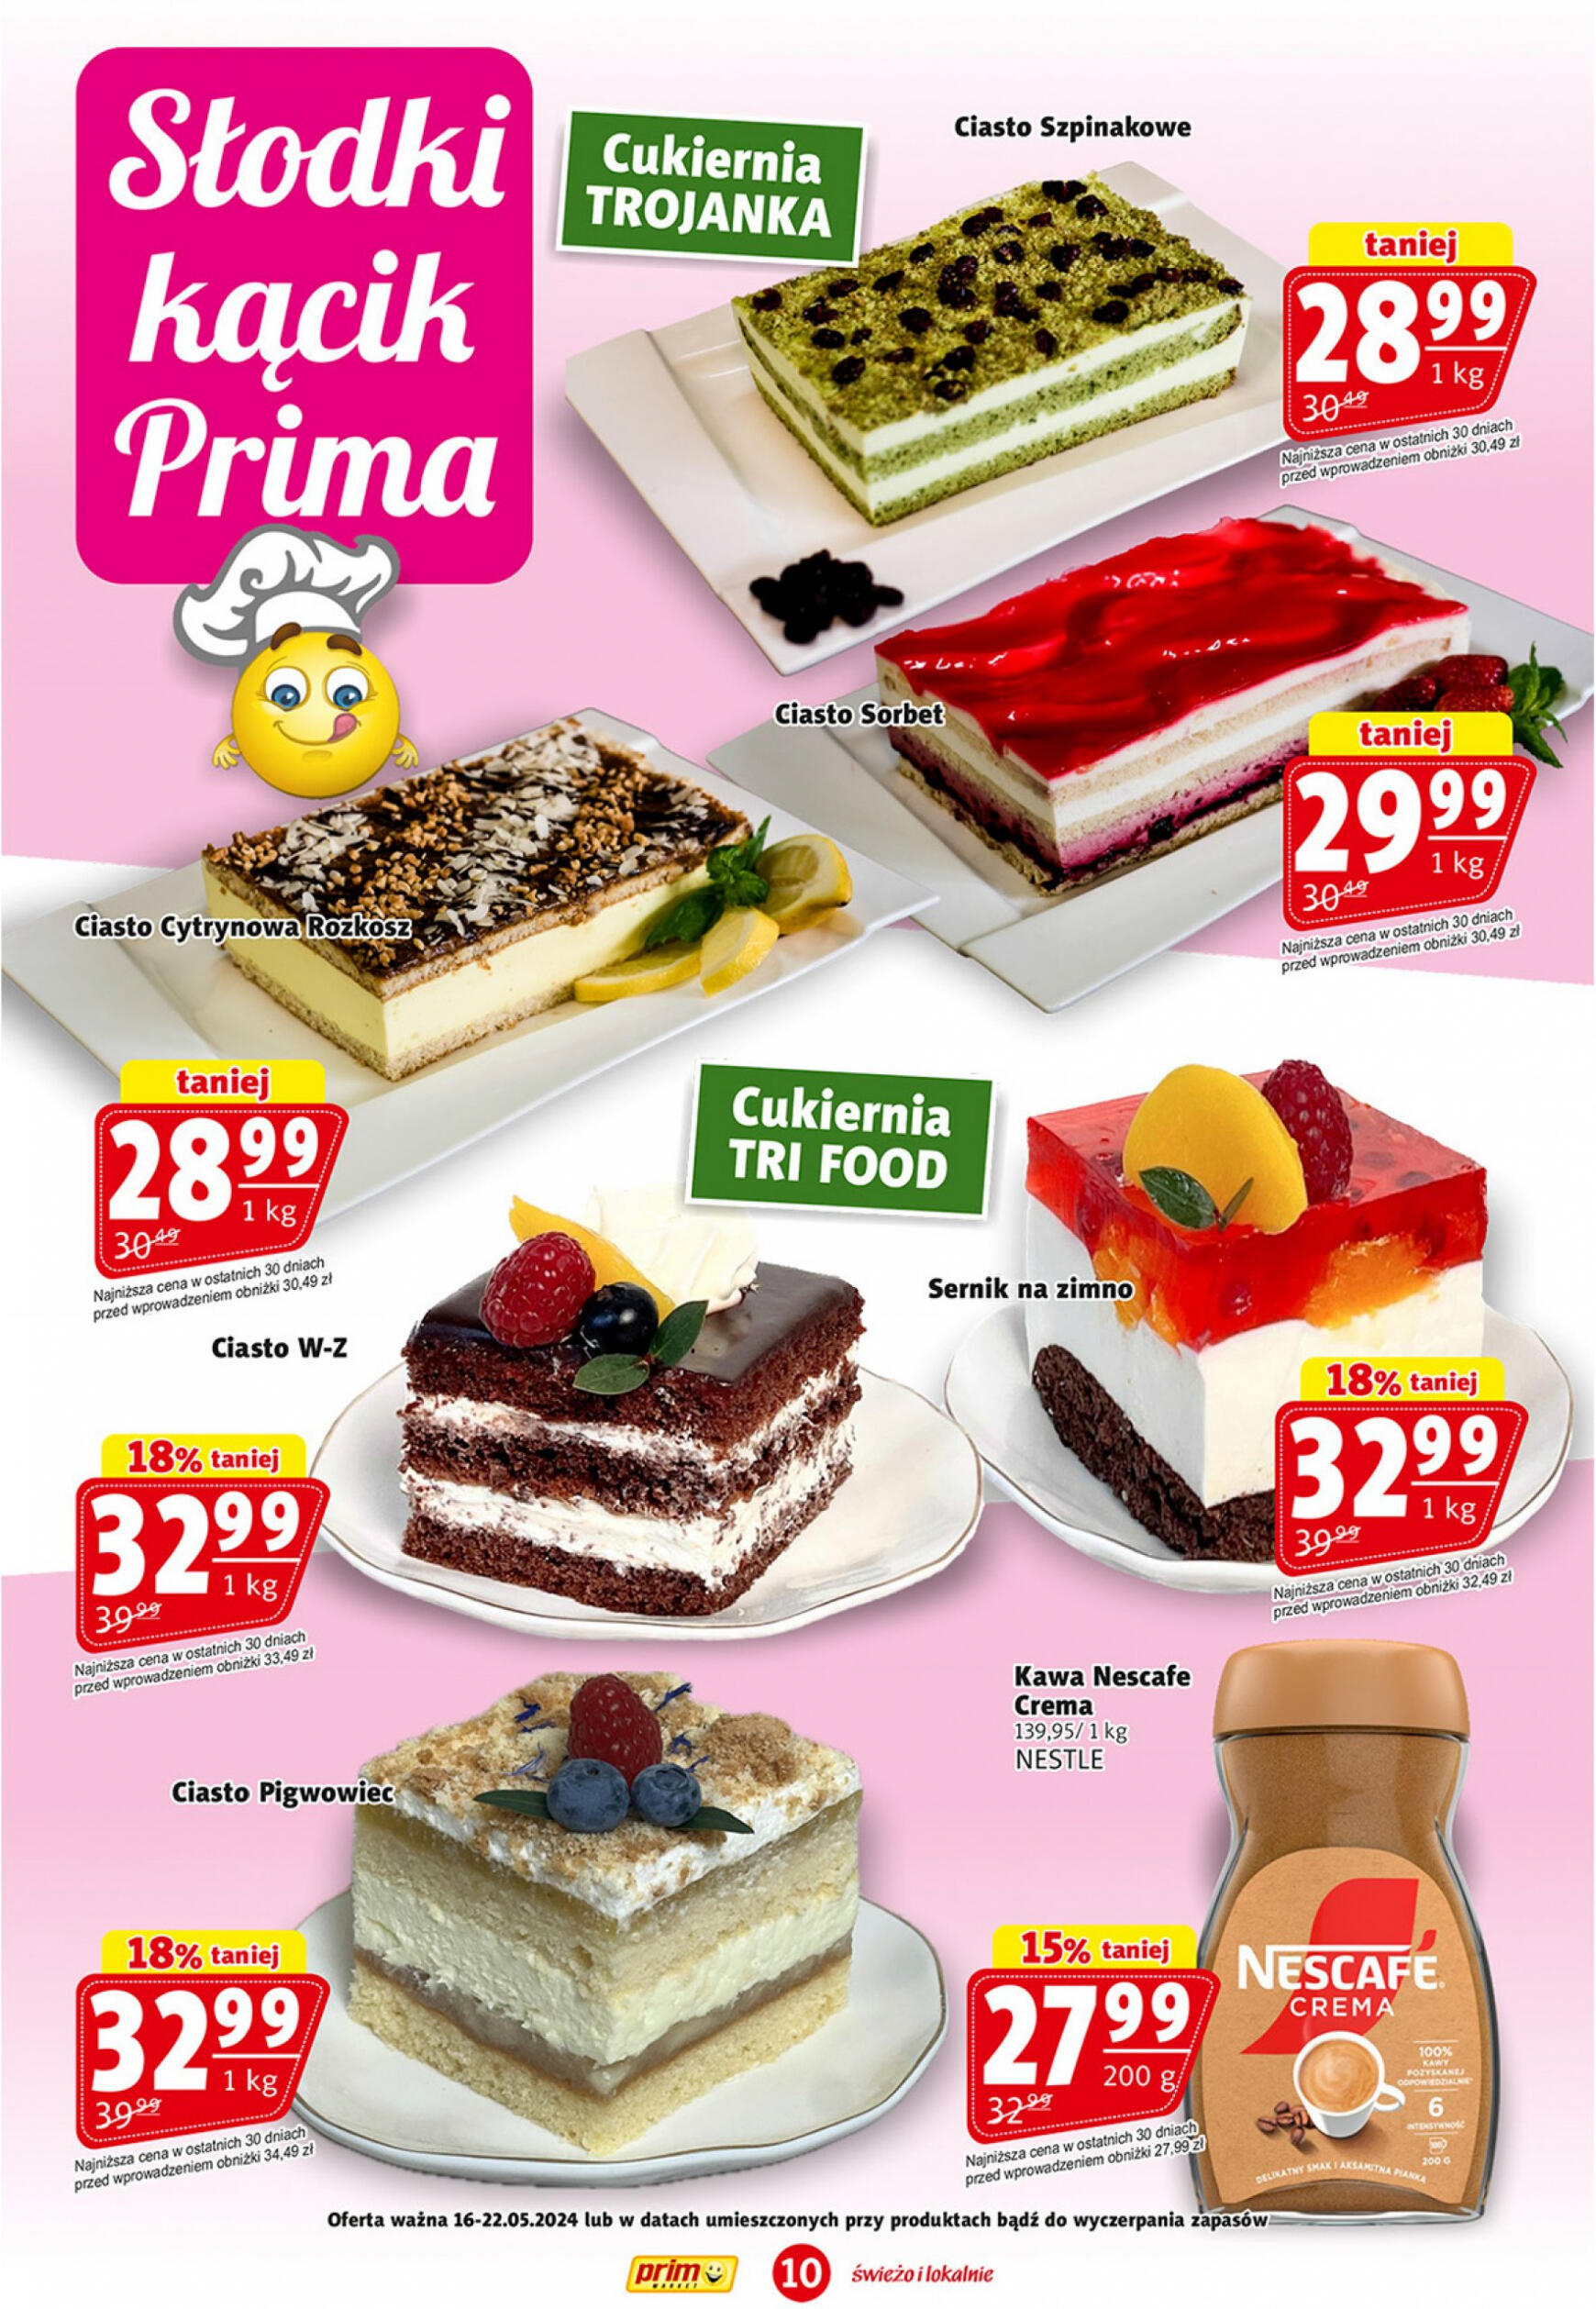 prim-market - Prim Market gazetka aktualna ważna od 16.05. - 22.05. - page: 10